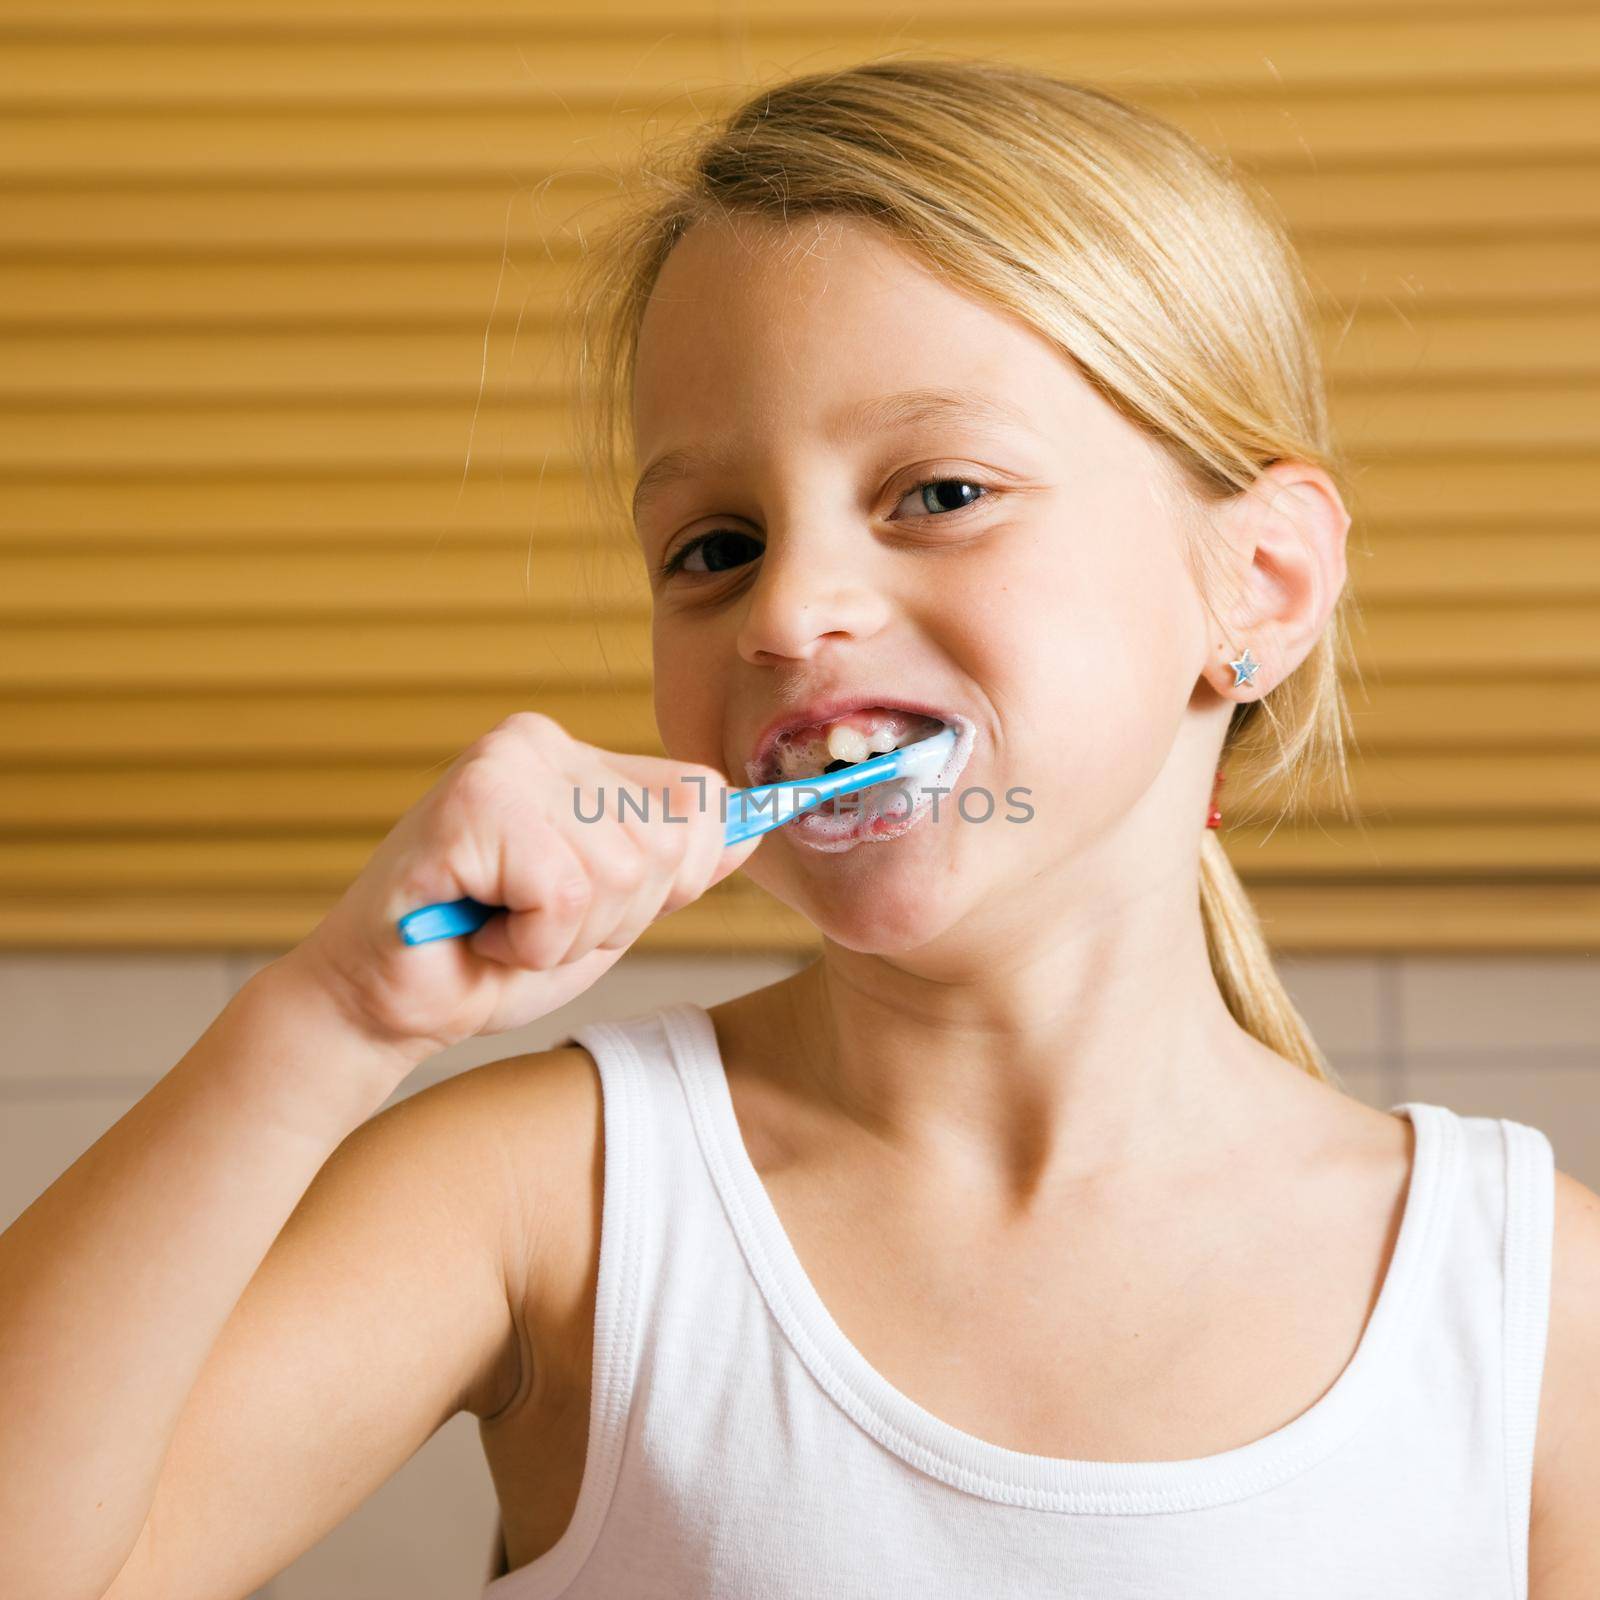 Child brushing teeth by Kzenon